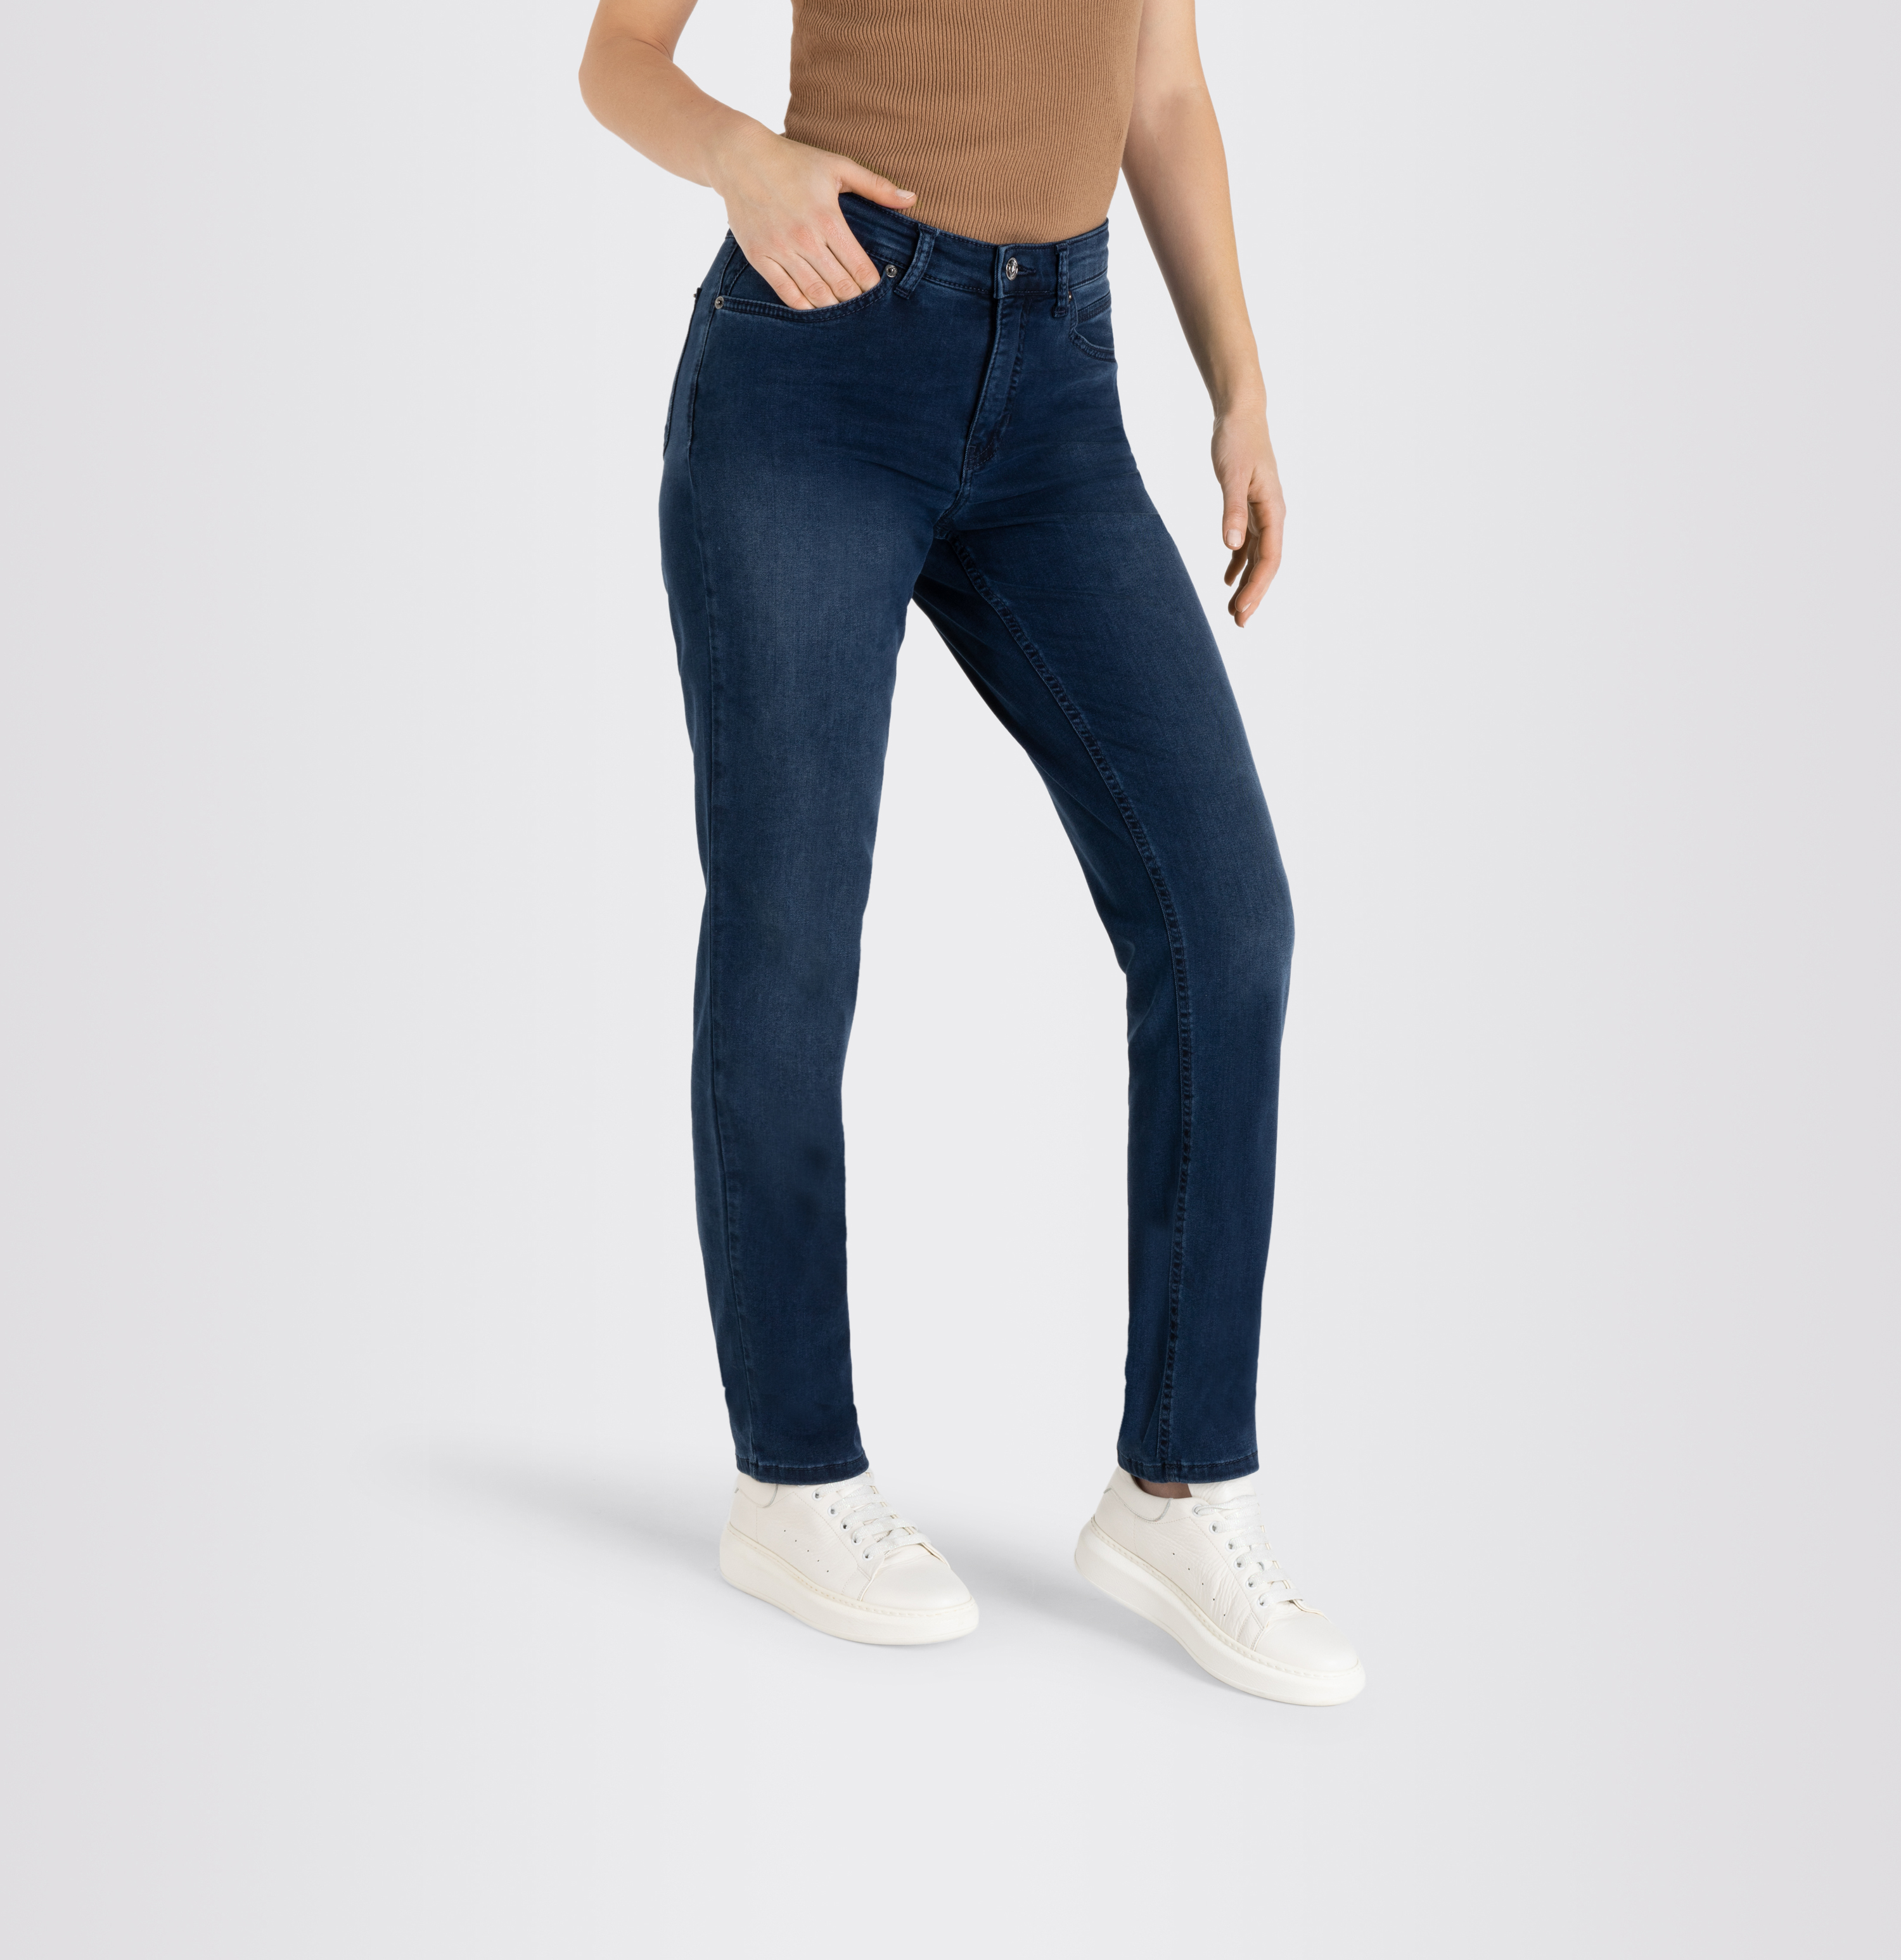 Women Pants, | dark MAC Shop blue FI Soft, Super Melanie, D800 Jeans 